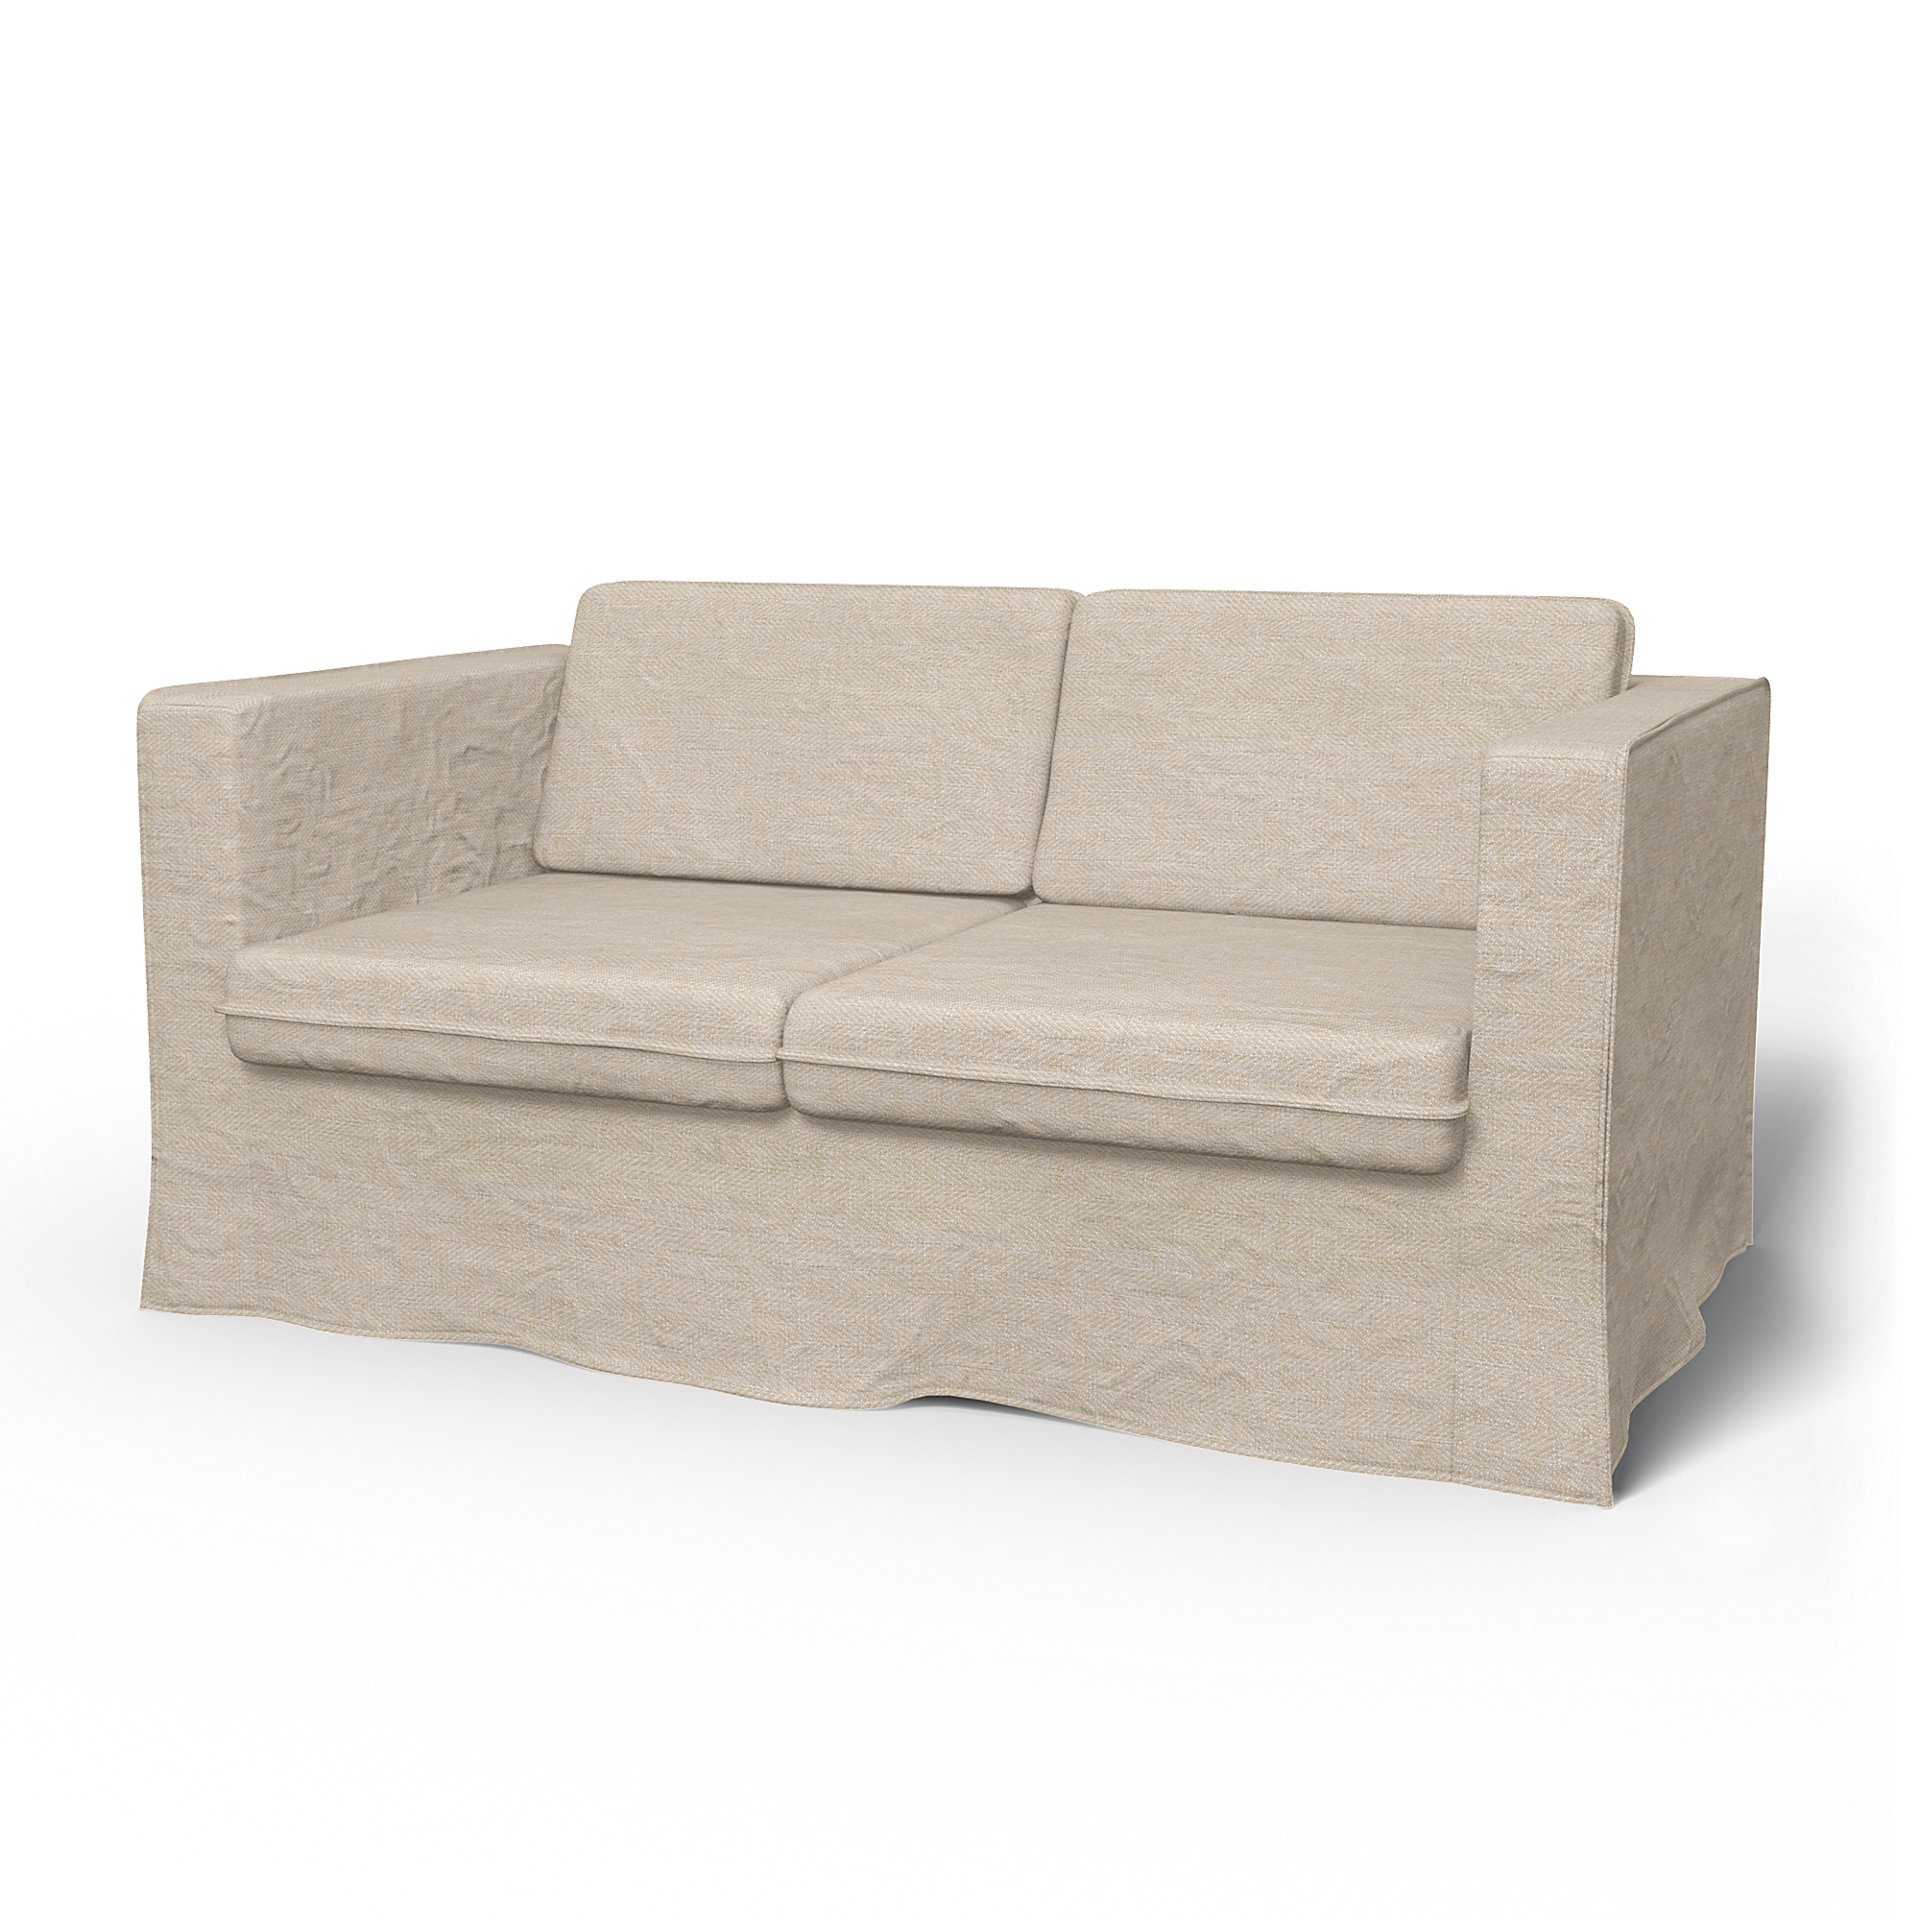 IKEA - Karlstad 2 Seater Sofa Cover, Natural, Boucle & Texture - Bemz